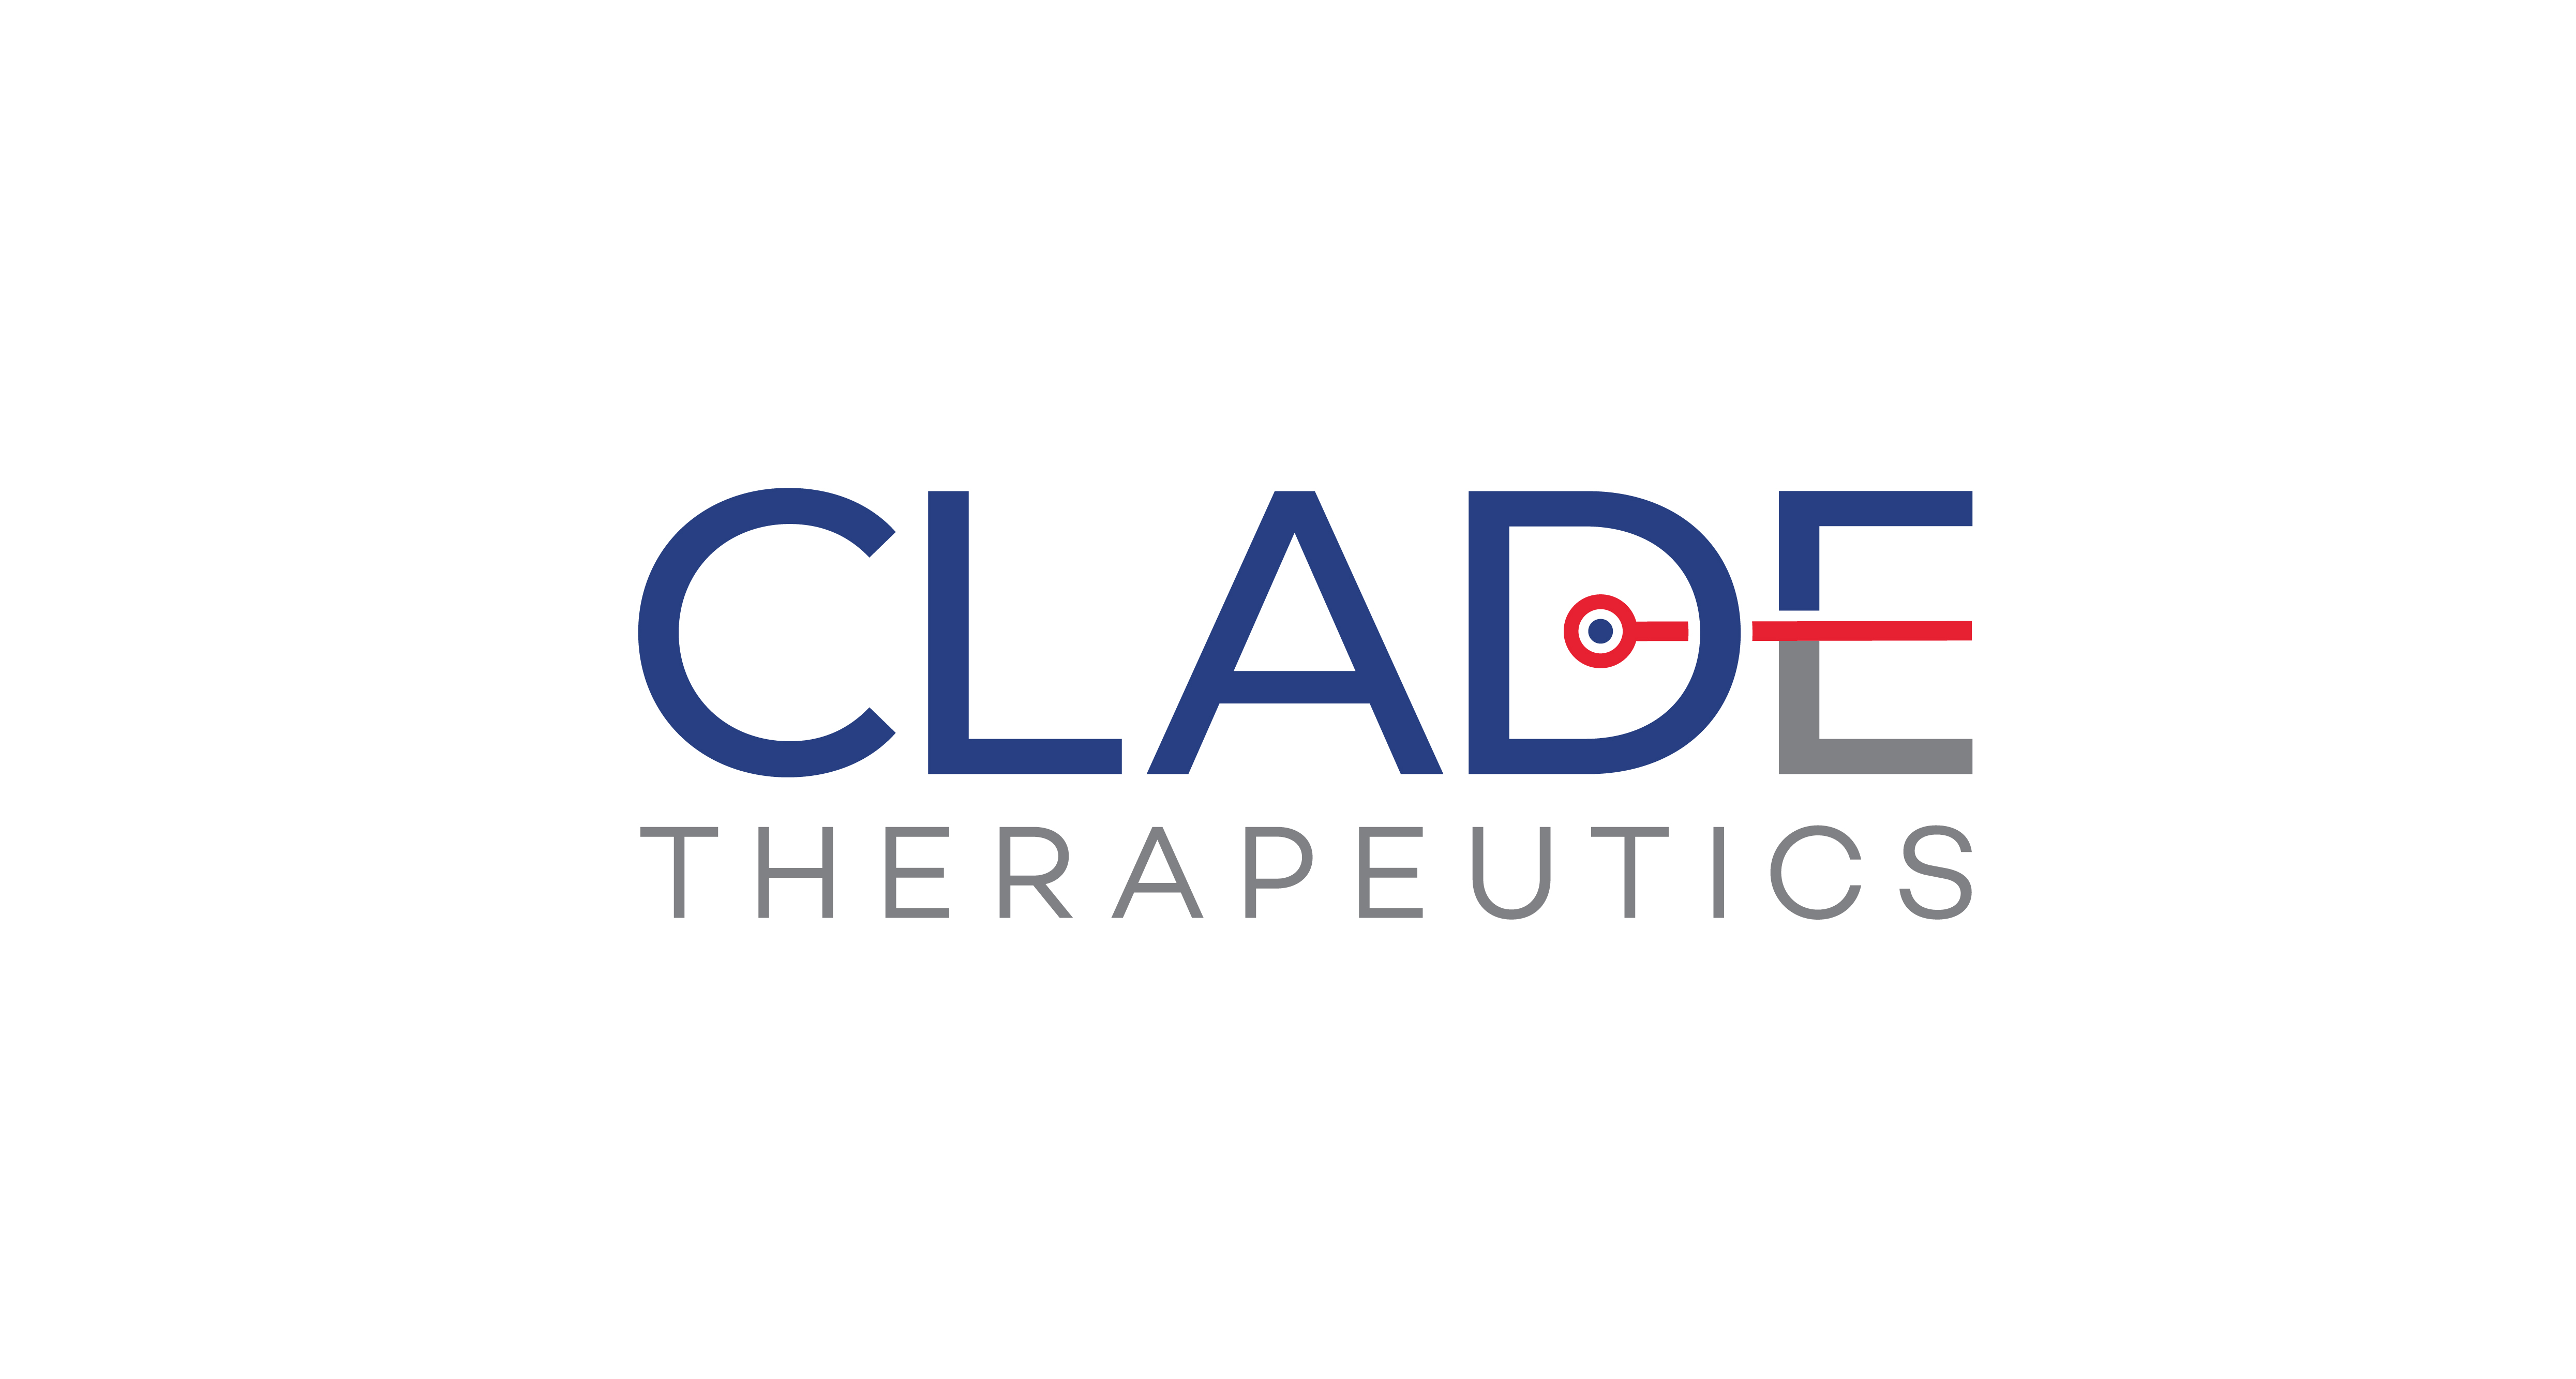 Clade Therapeutics